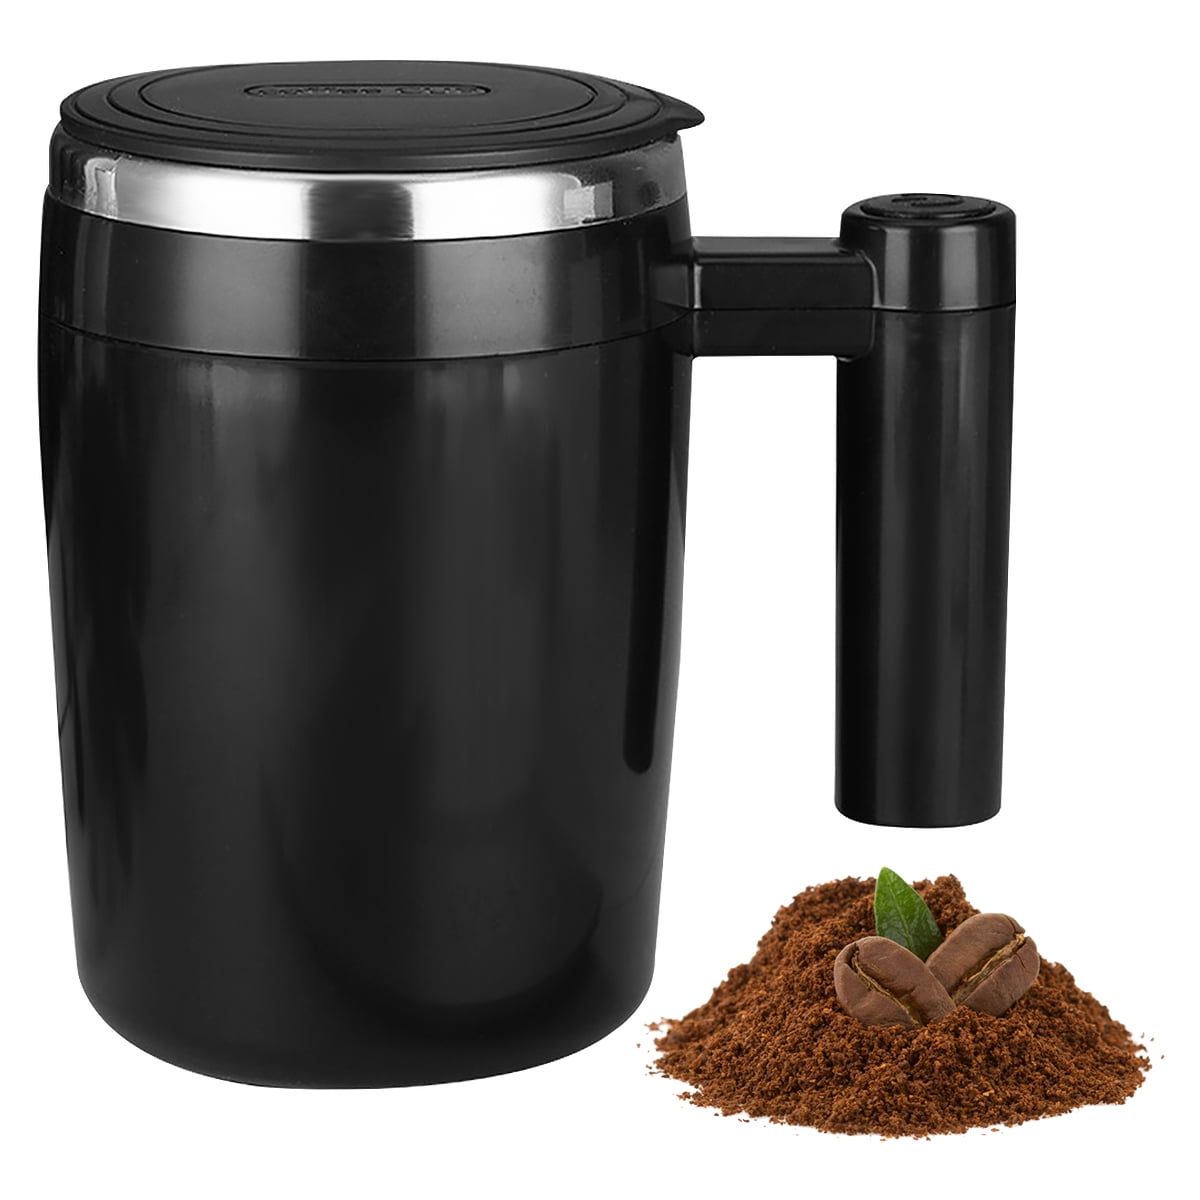 Kitcheniva Electric Double Insulated Self Stirring Mug 400ml, 1 Pcs - Kroger